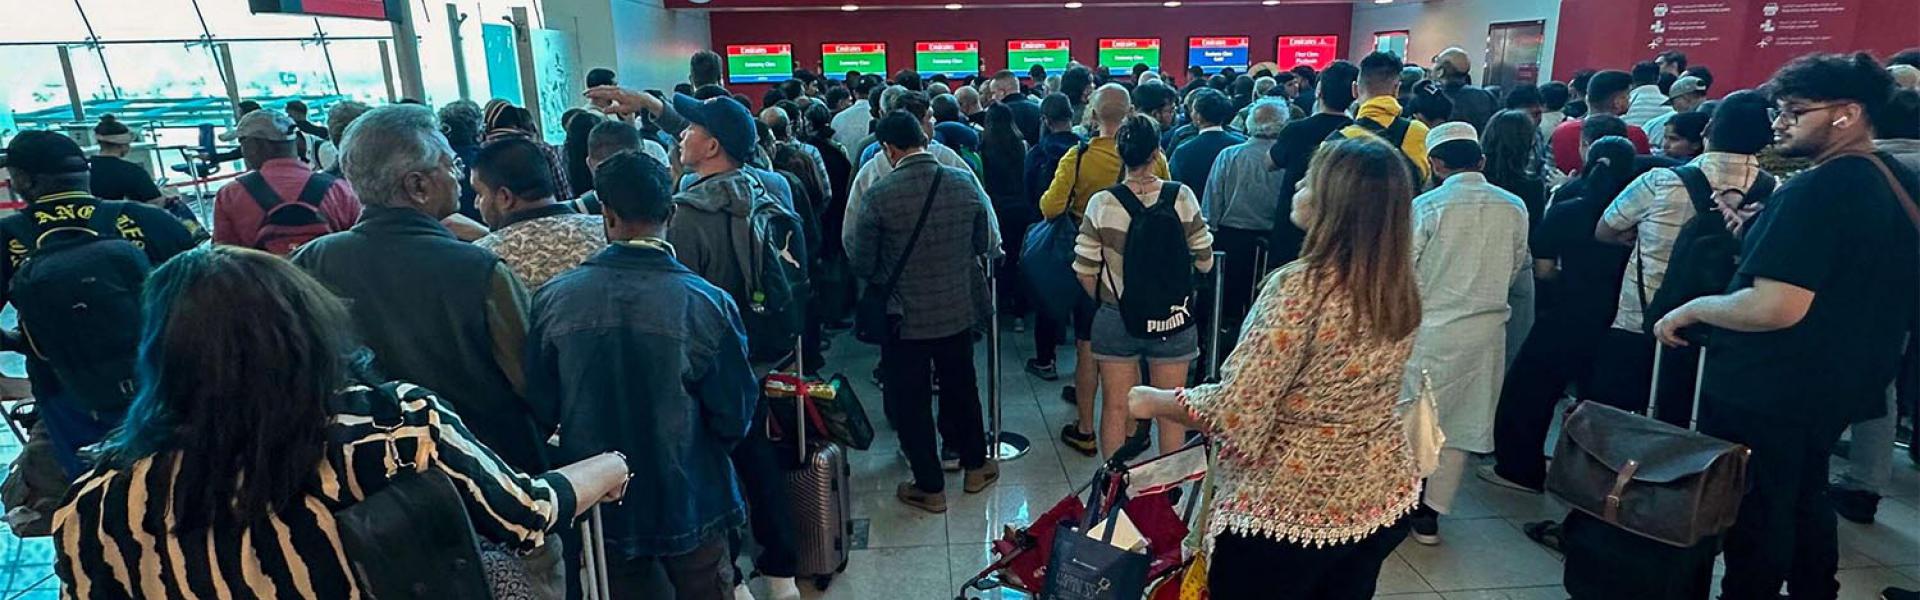 Dubai International advises passengers in Dubai not to come to the airport